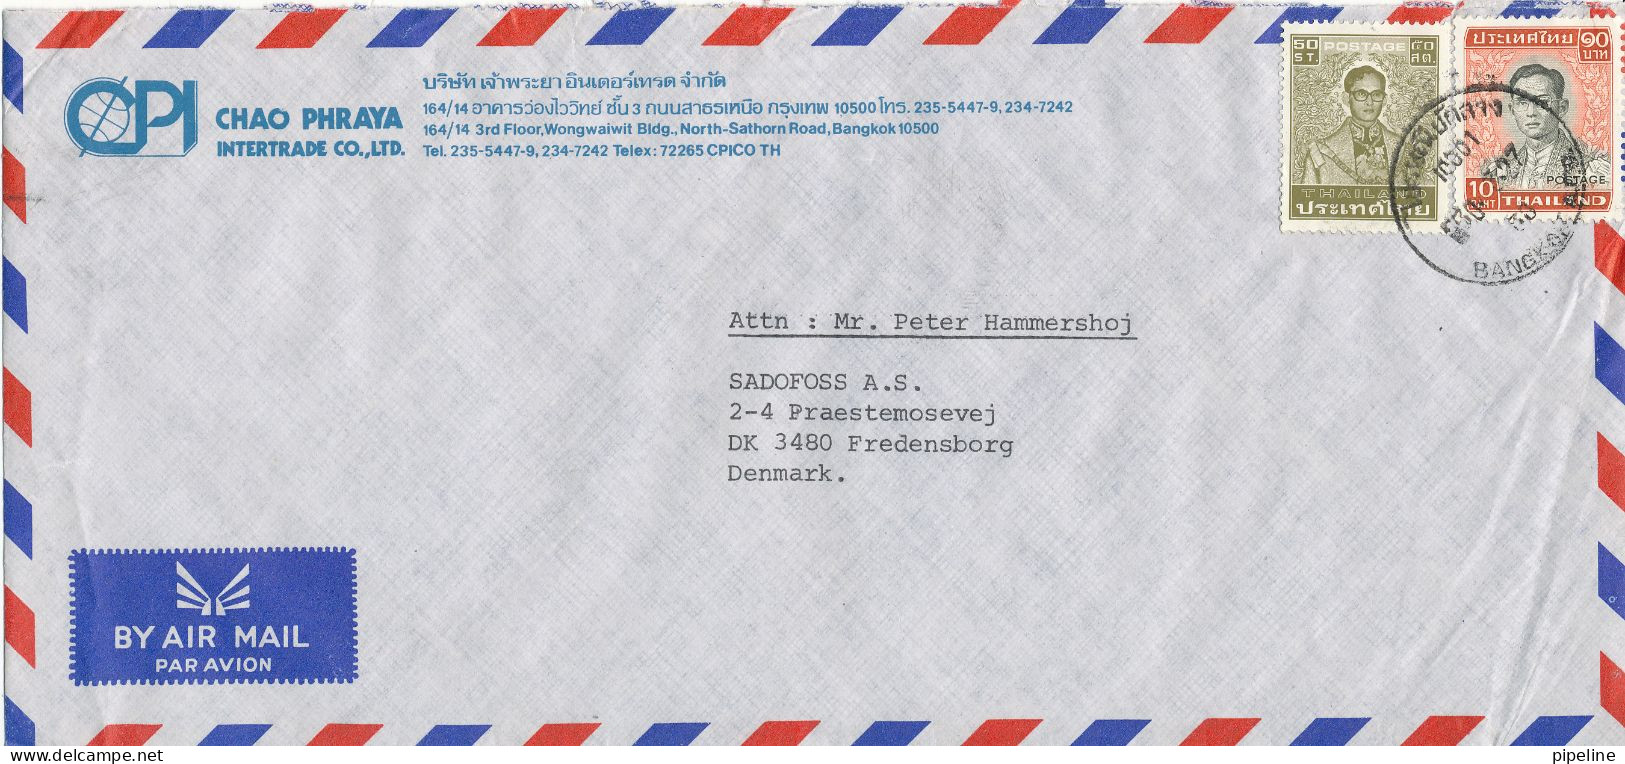 Thailand Air Mail Cover Sent To Denmark Bangkok - Thailand